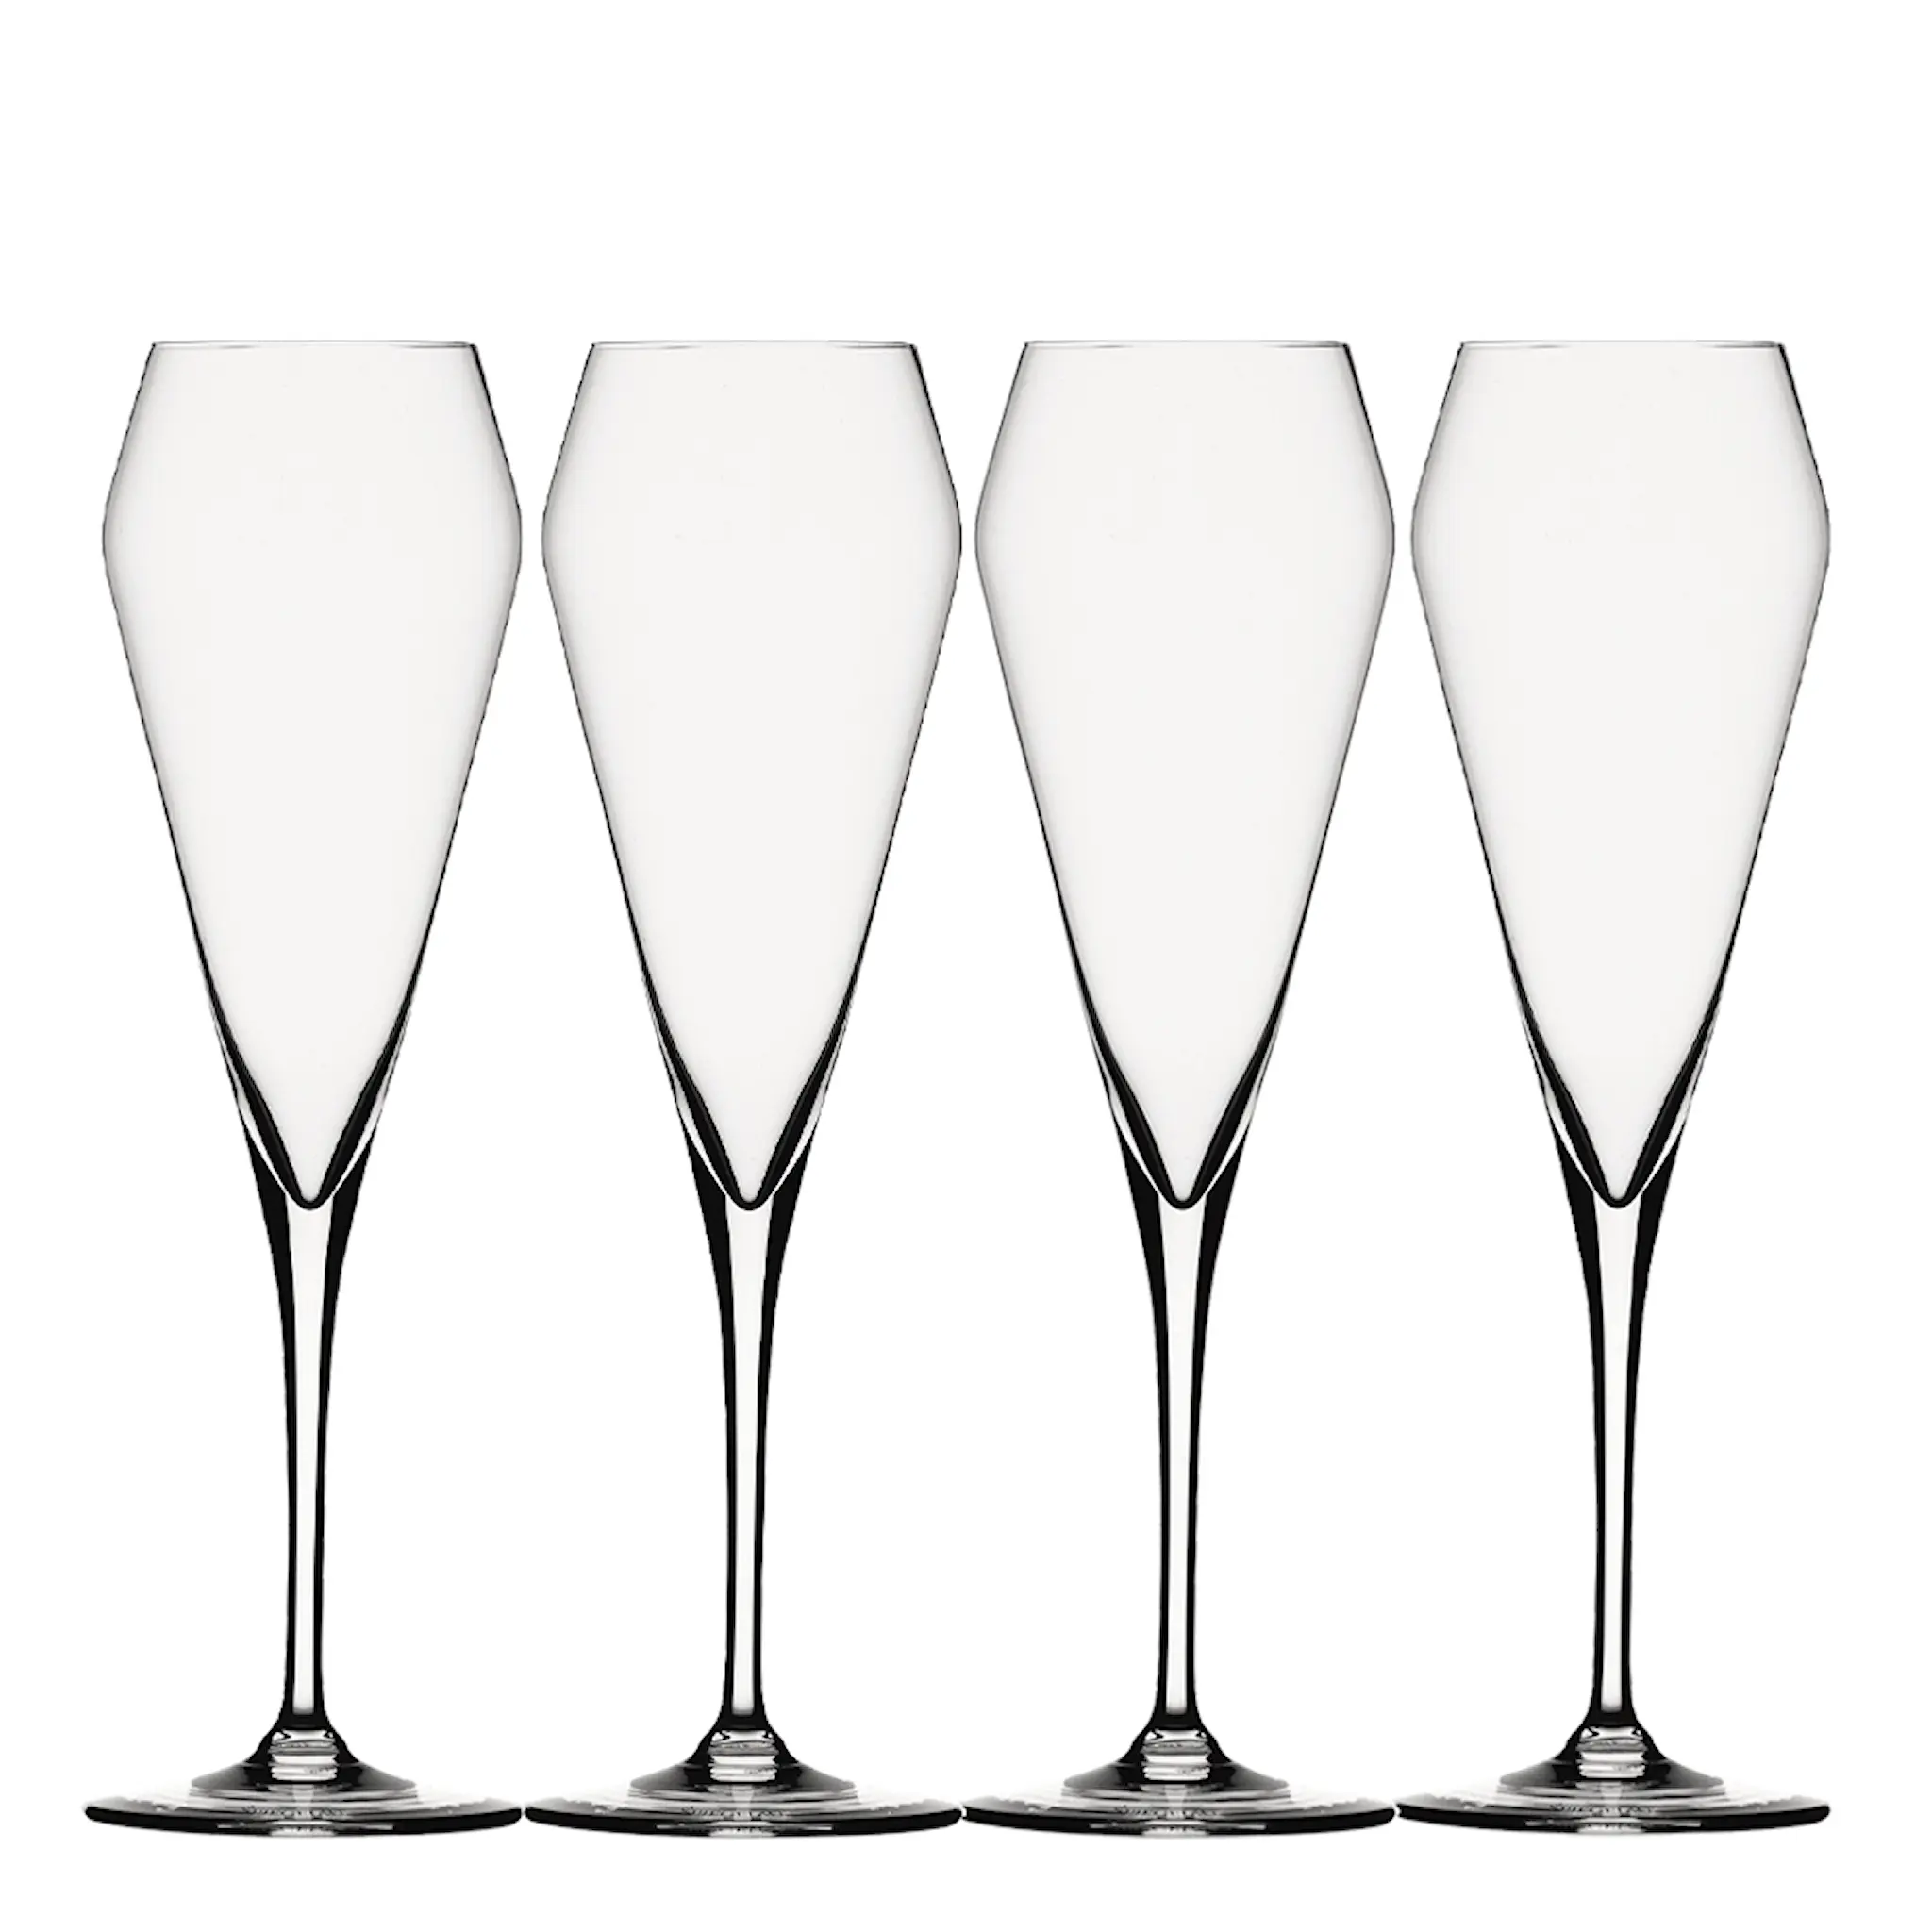 Spiegelau Willsberger anniversary champagneglass 24 cl 4 stk